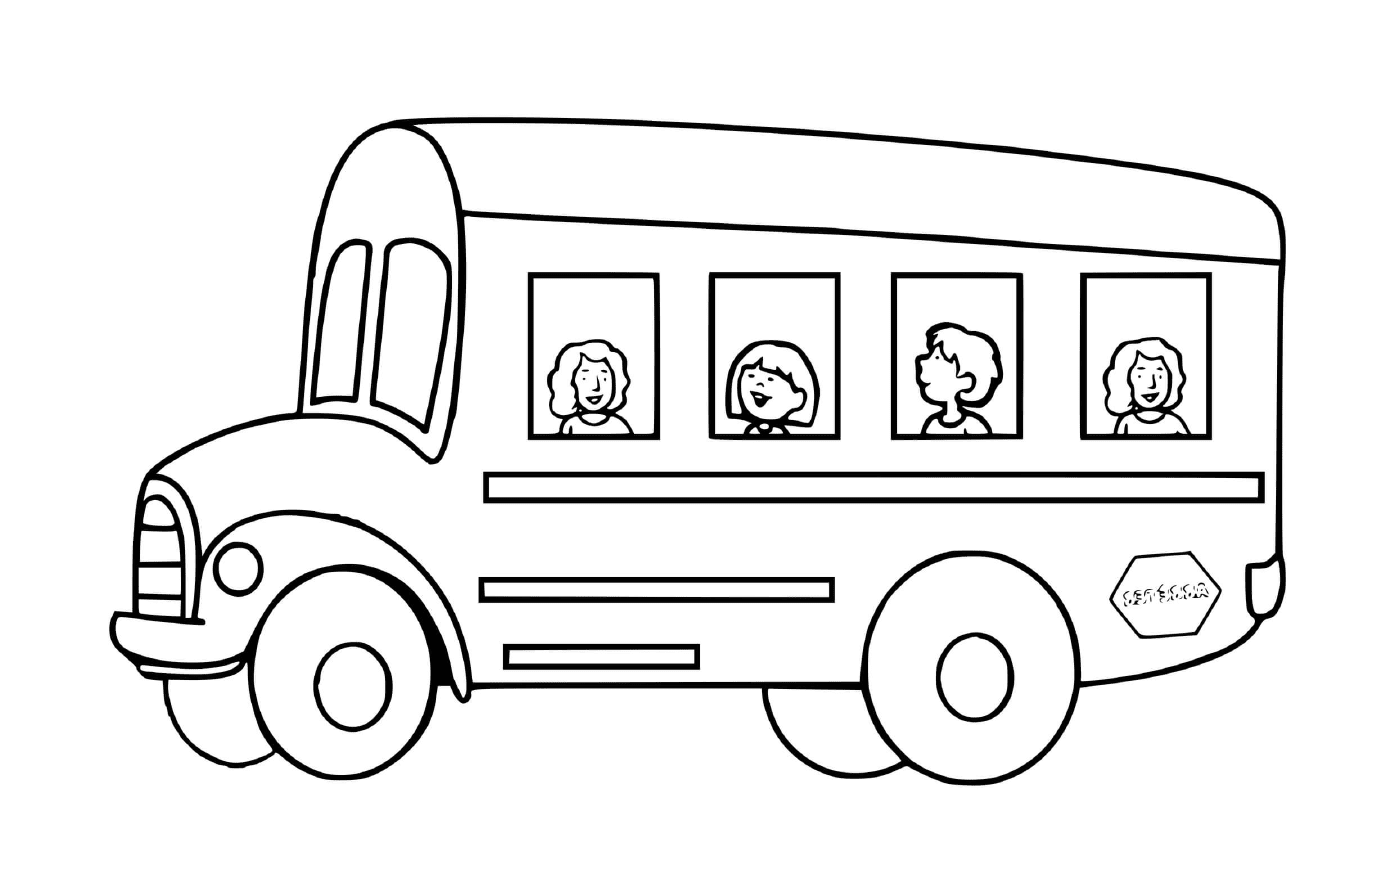  School transportation for children: the bus 